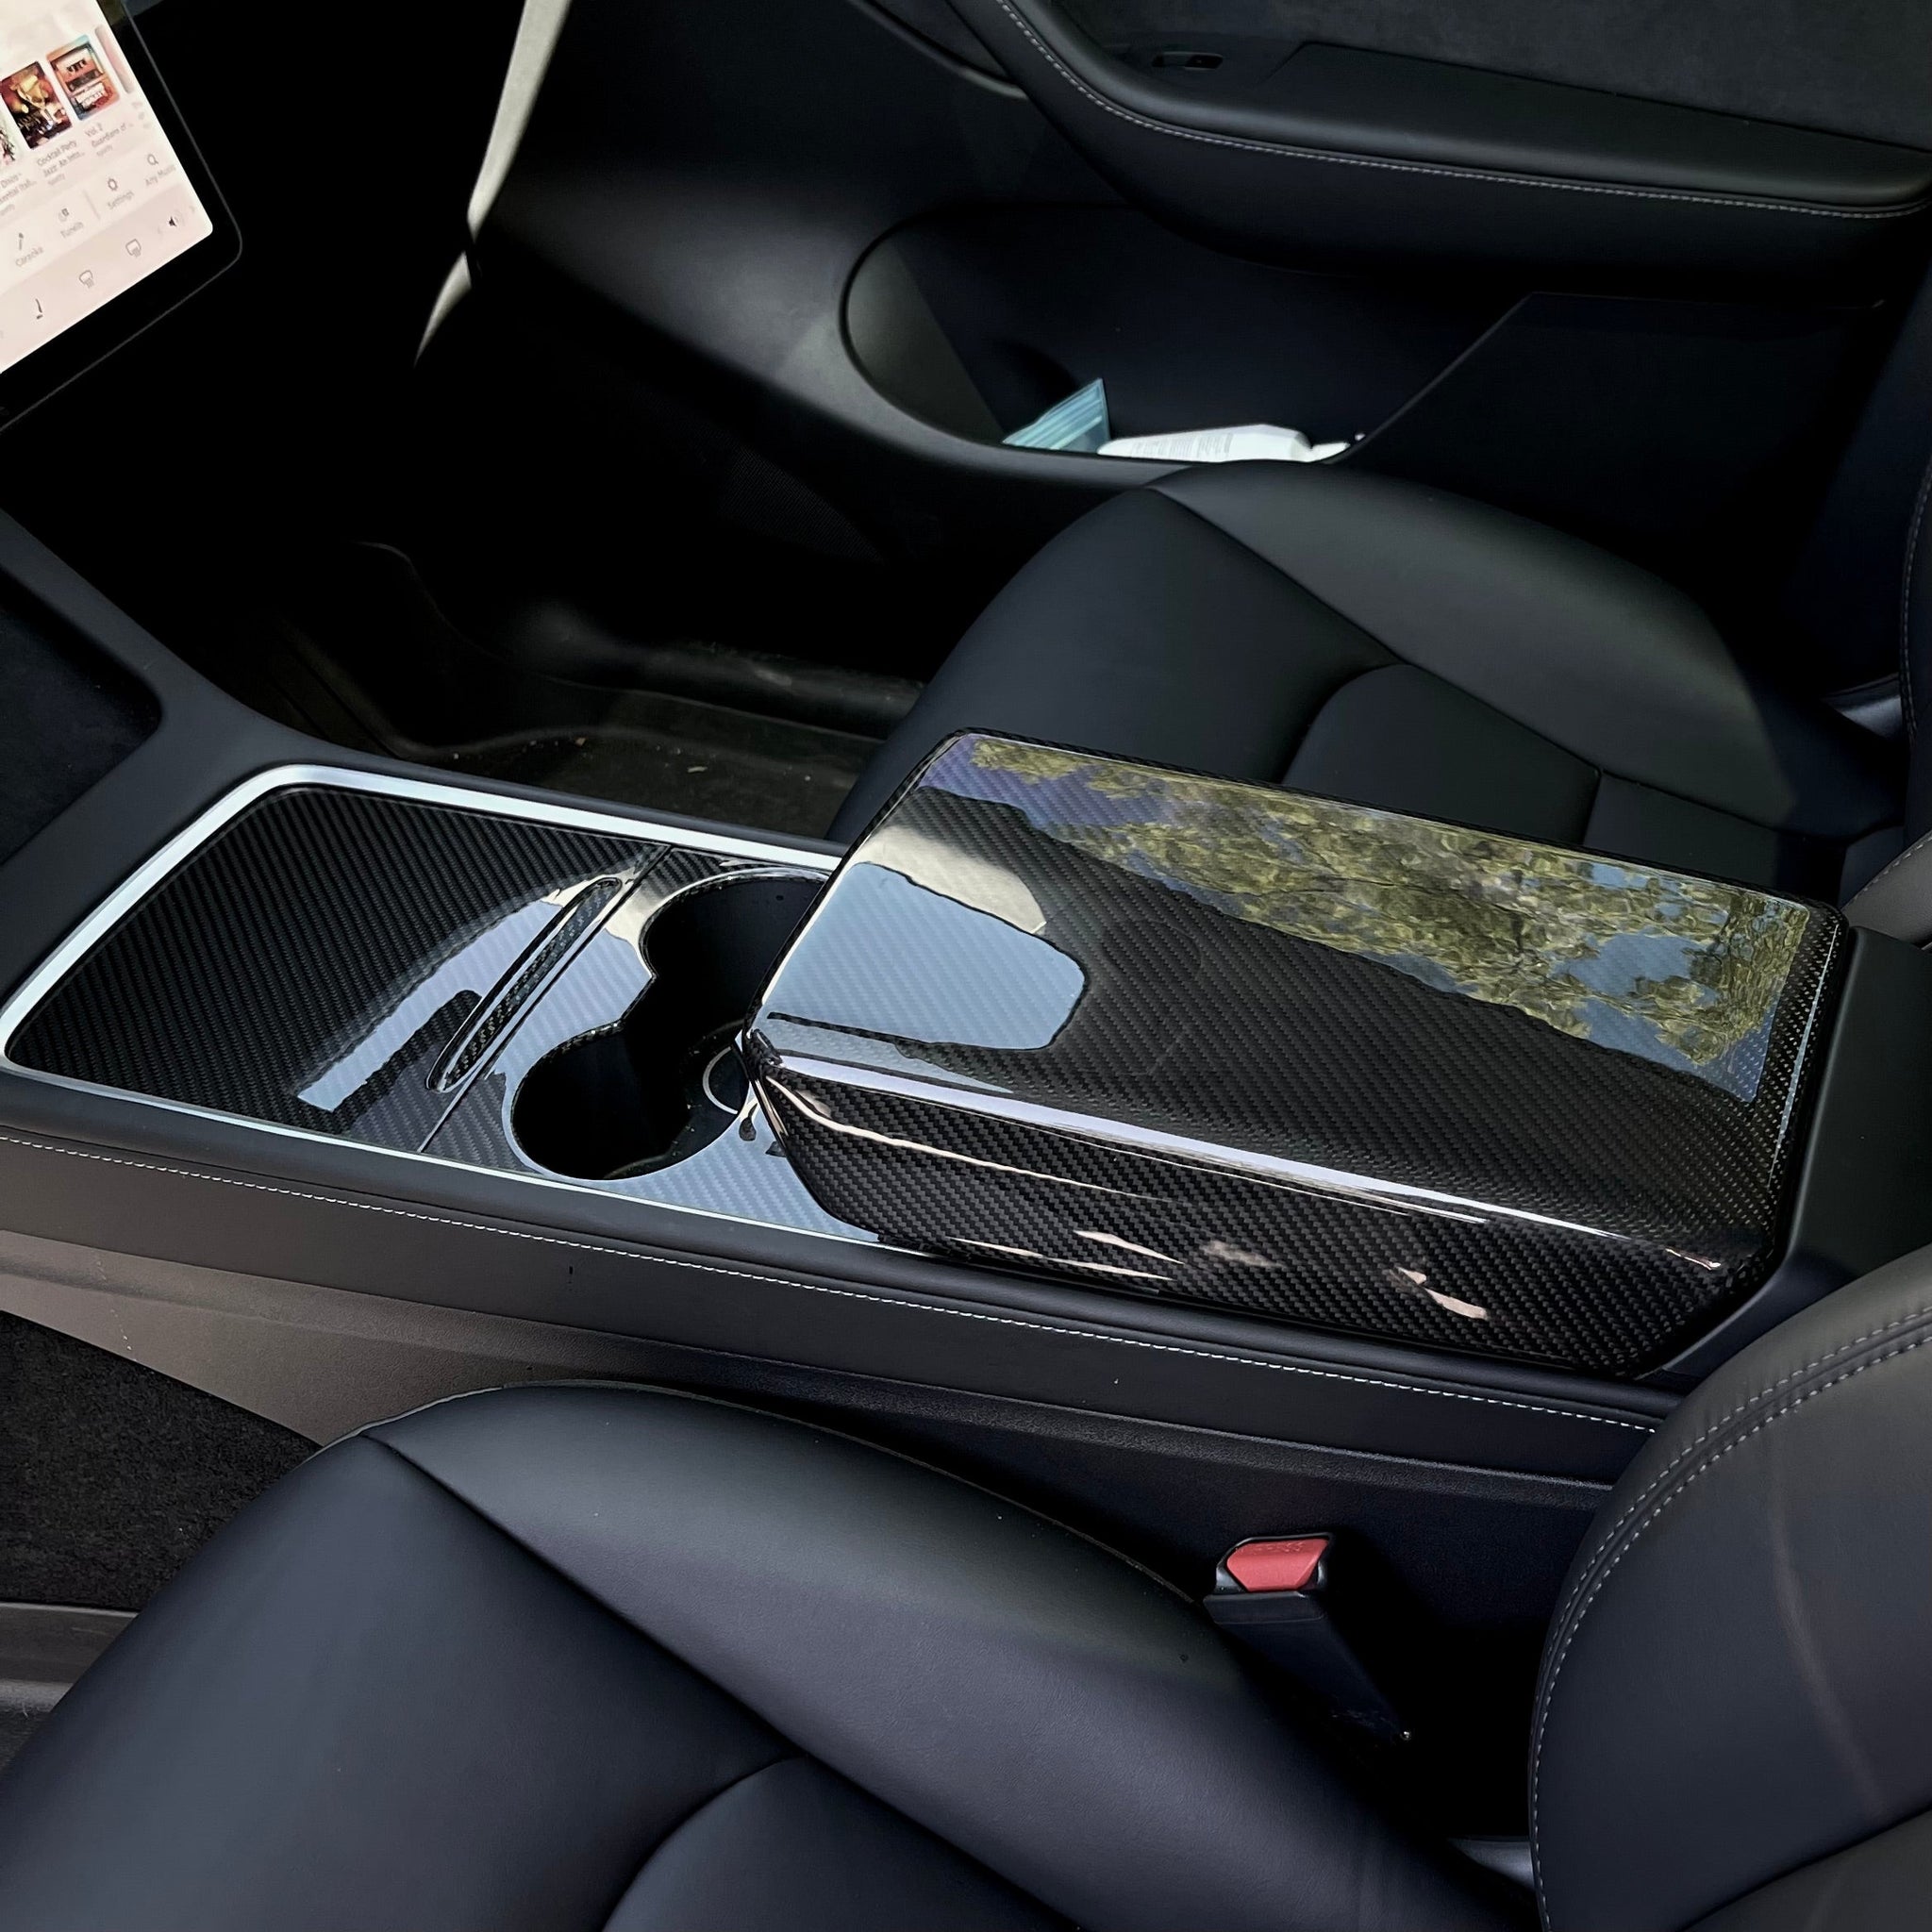 Model 3 / Y Armrest Cover - Carbon Fiber Interior Mods - Tesery Official Store